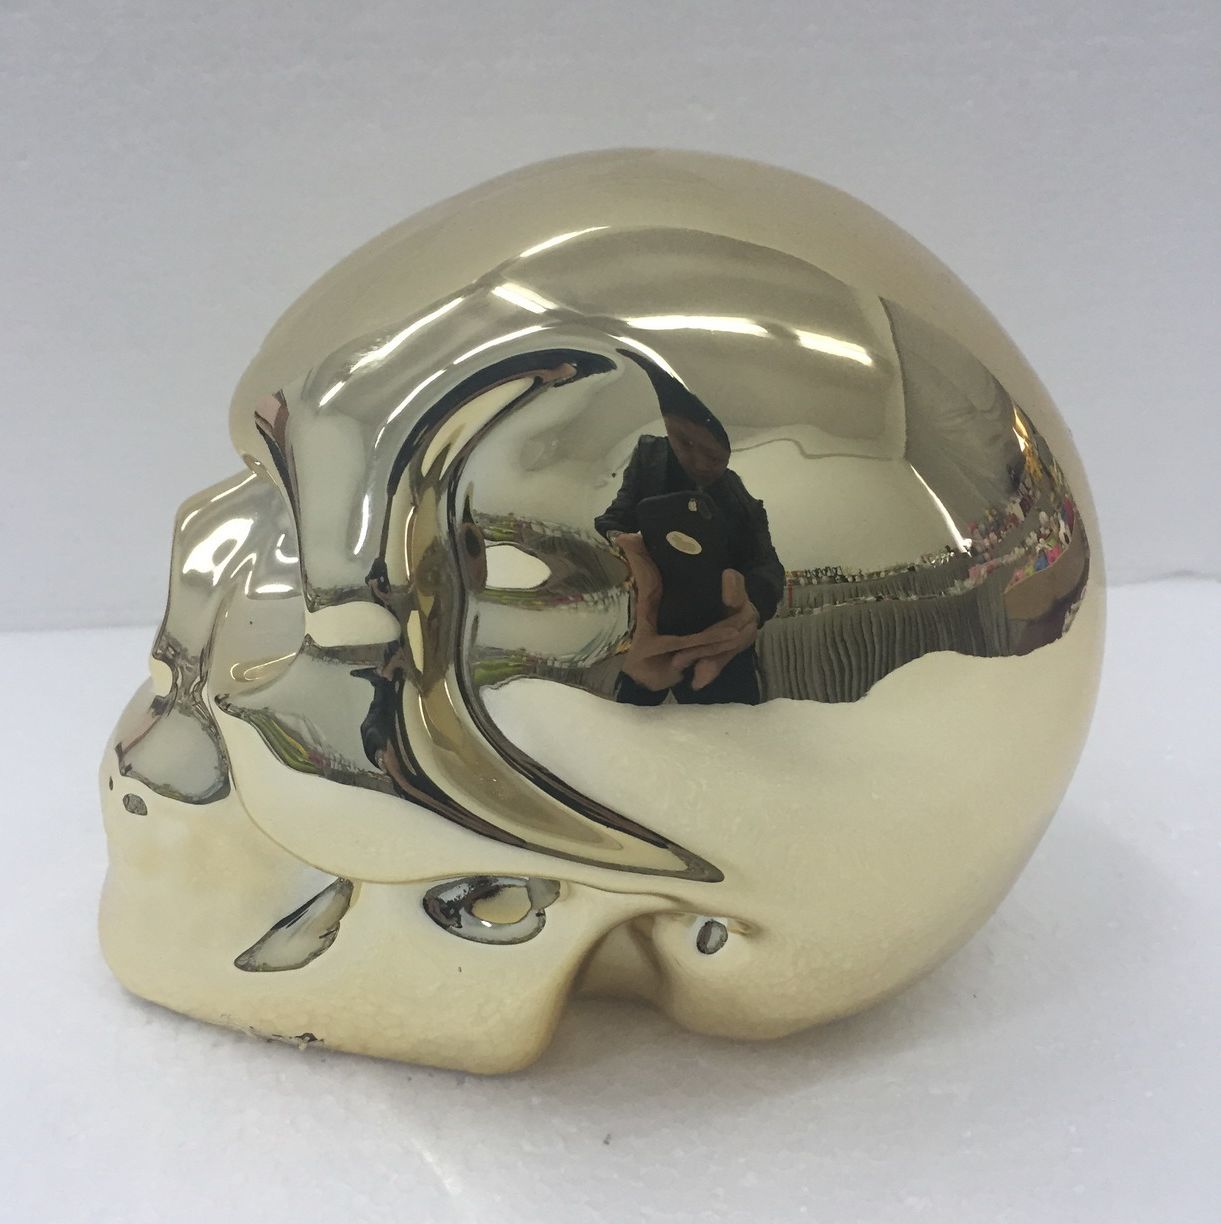 Direct Factory Ceramic Halloween Skull Bobble Head